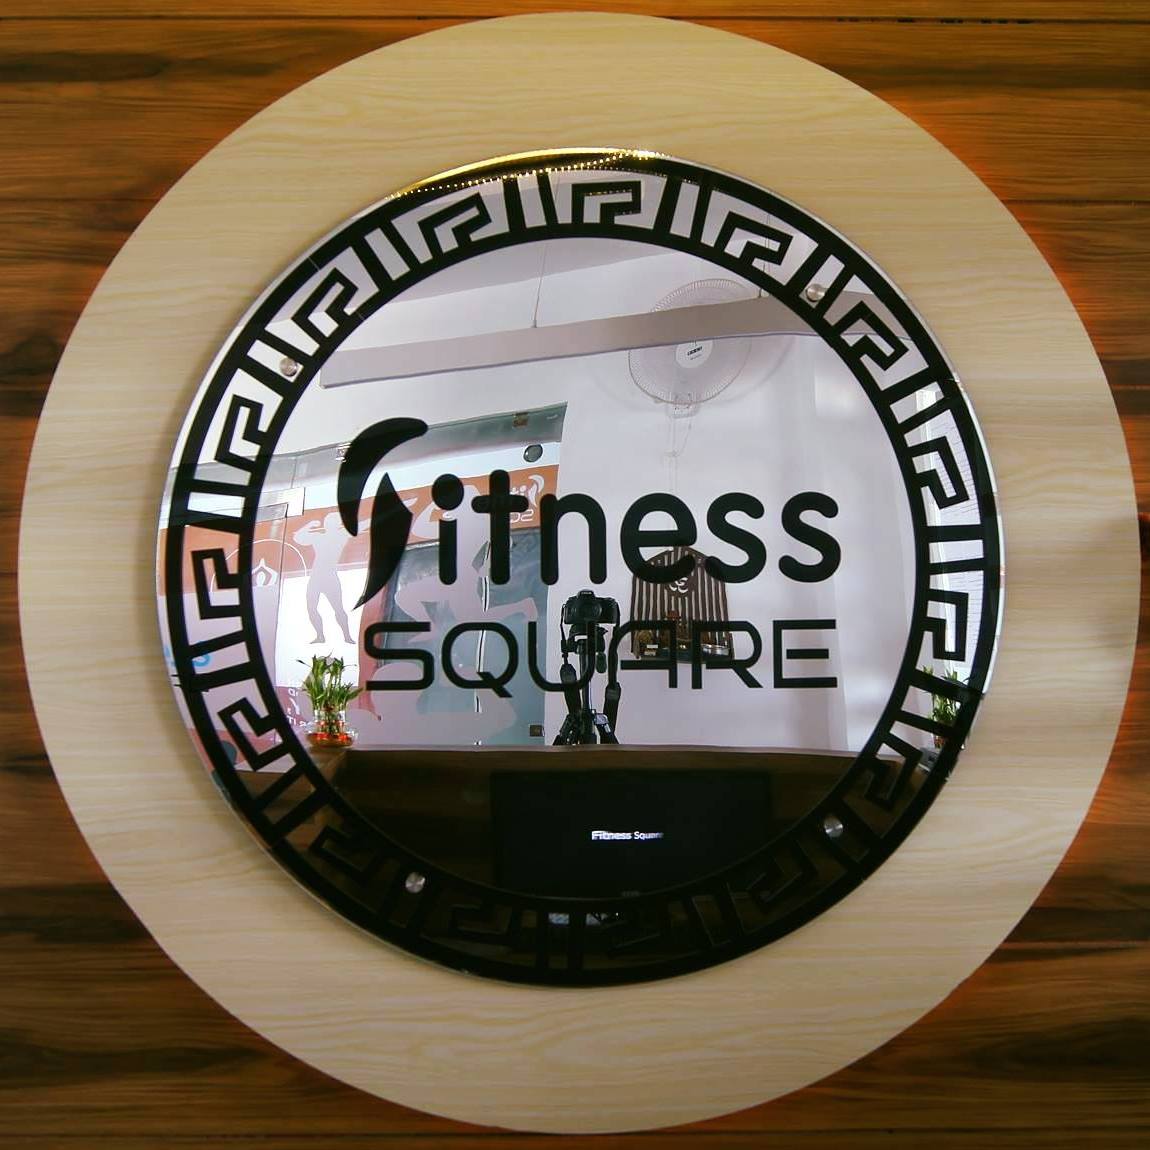 Fitness Square|Salon|Active Life